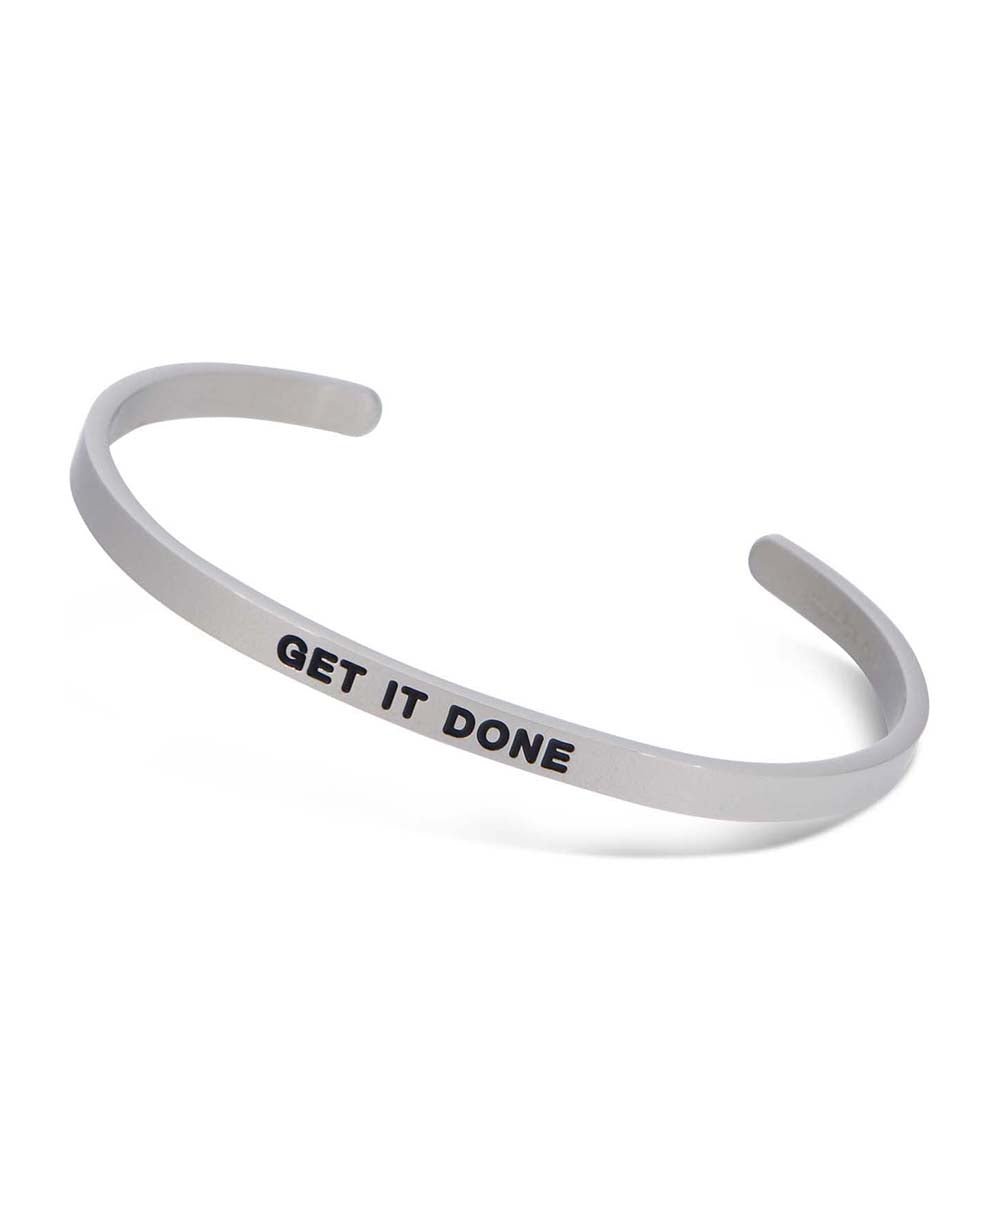 Get it Done, Motivational Cuff Bracelet - Bracelets